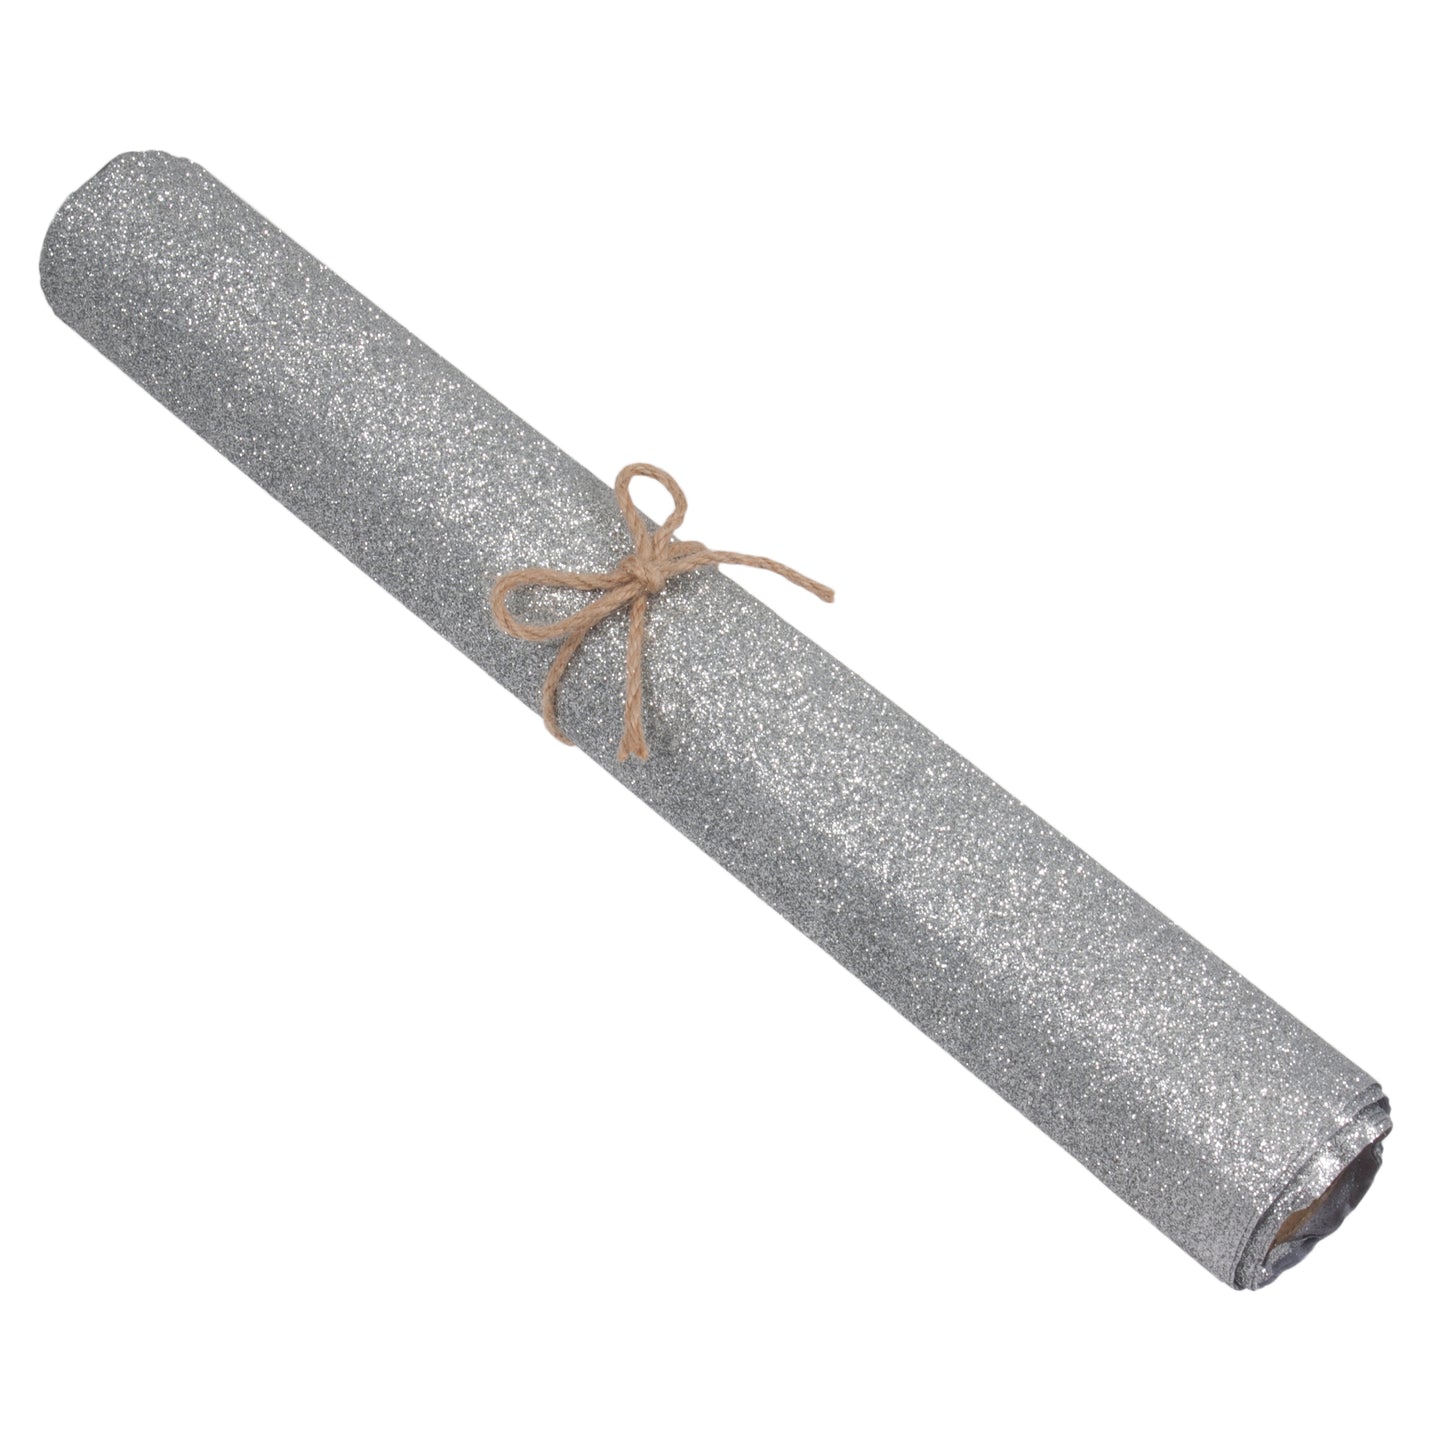 Glitter Fabric Roll: 2m x 40cm Silver